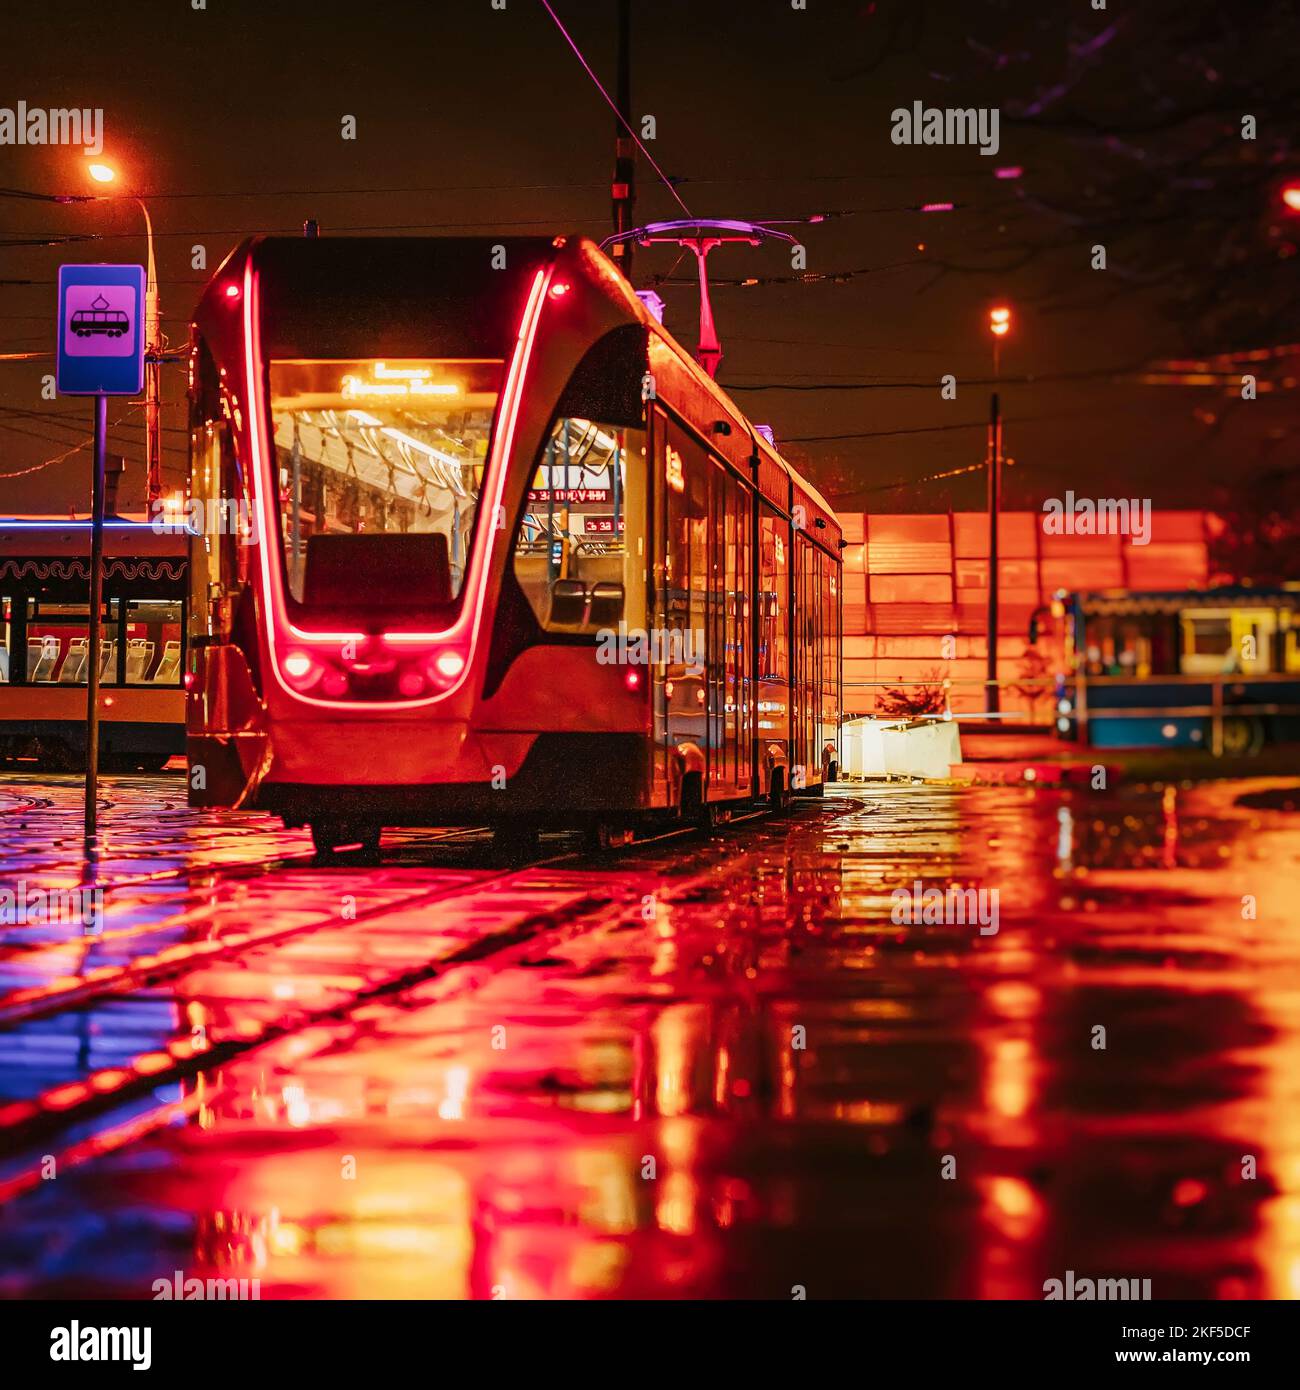 City Night Tram, Tram Endstation, City Lights Beleuchtung, selektive Fokussierung. Konzept der öffentlichen Verkehrsmittel Stockfoto